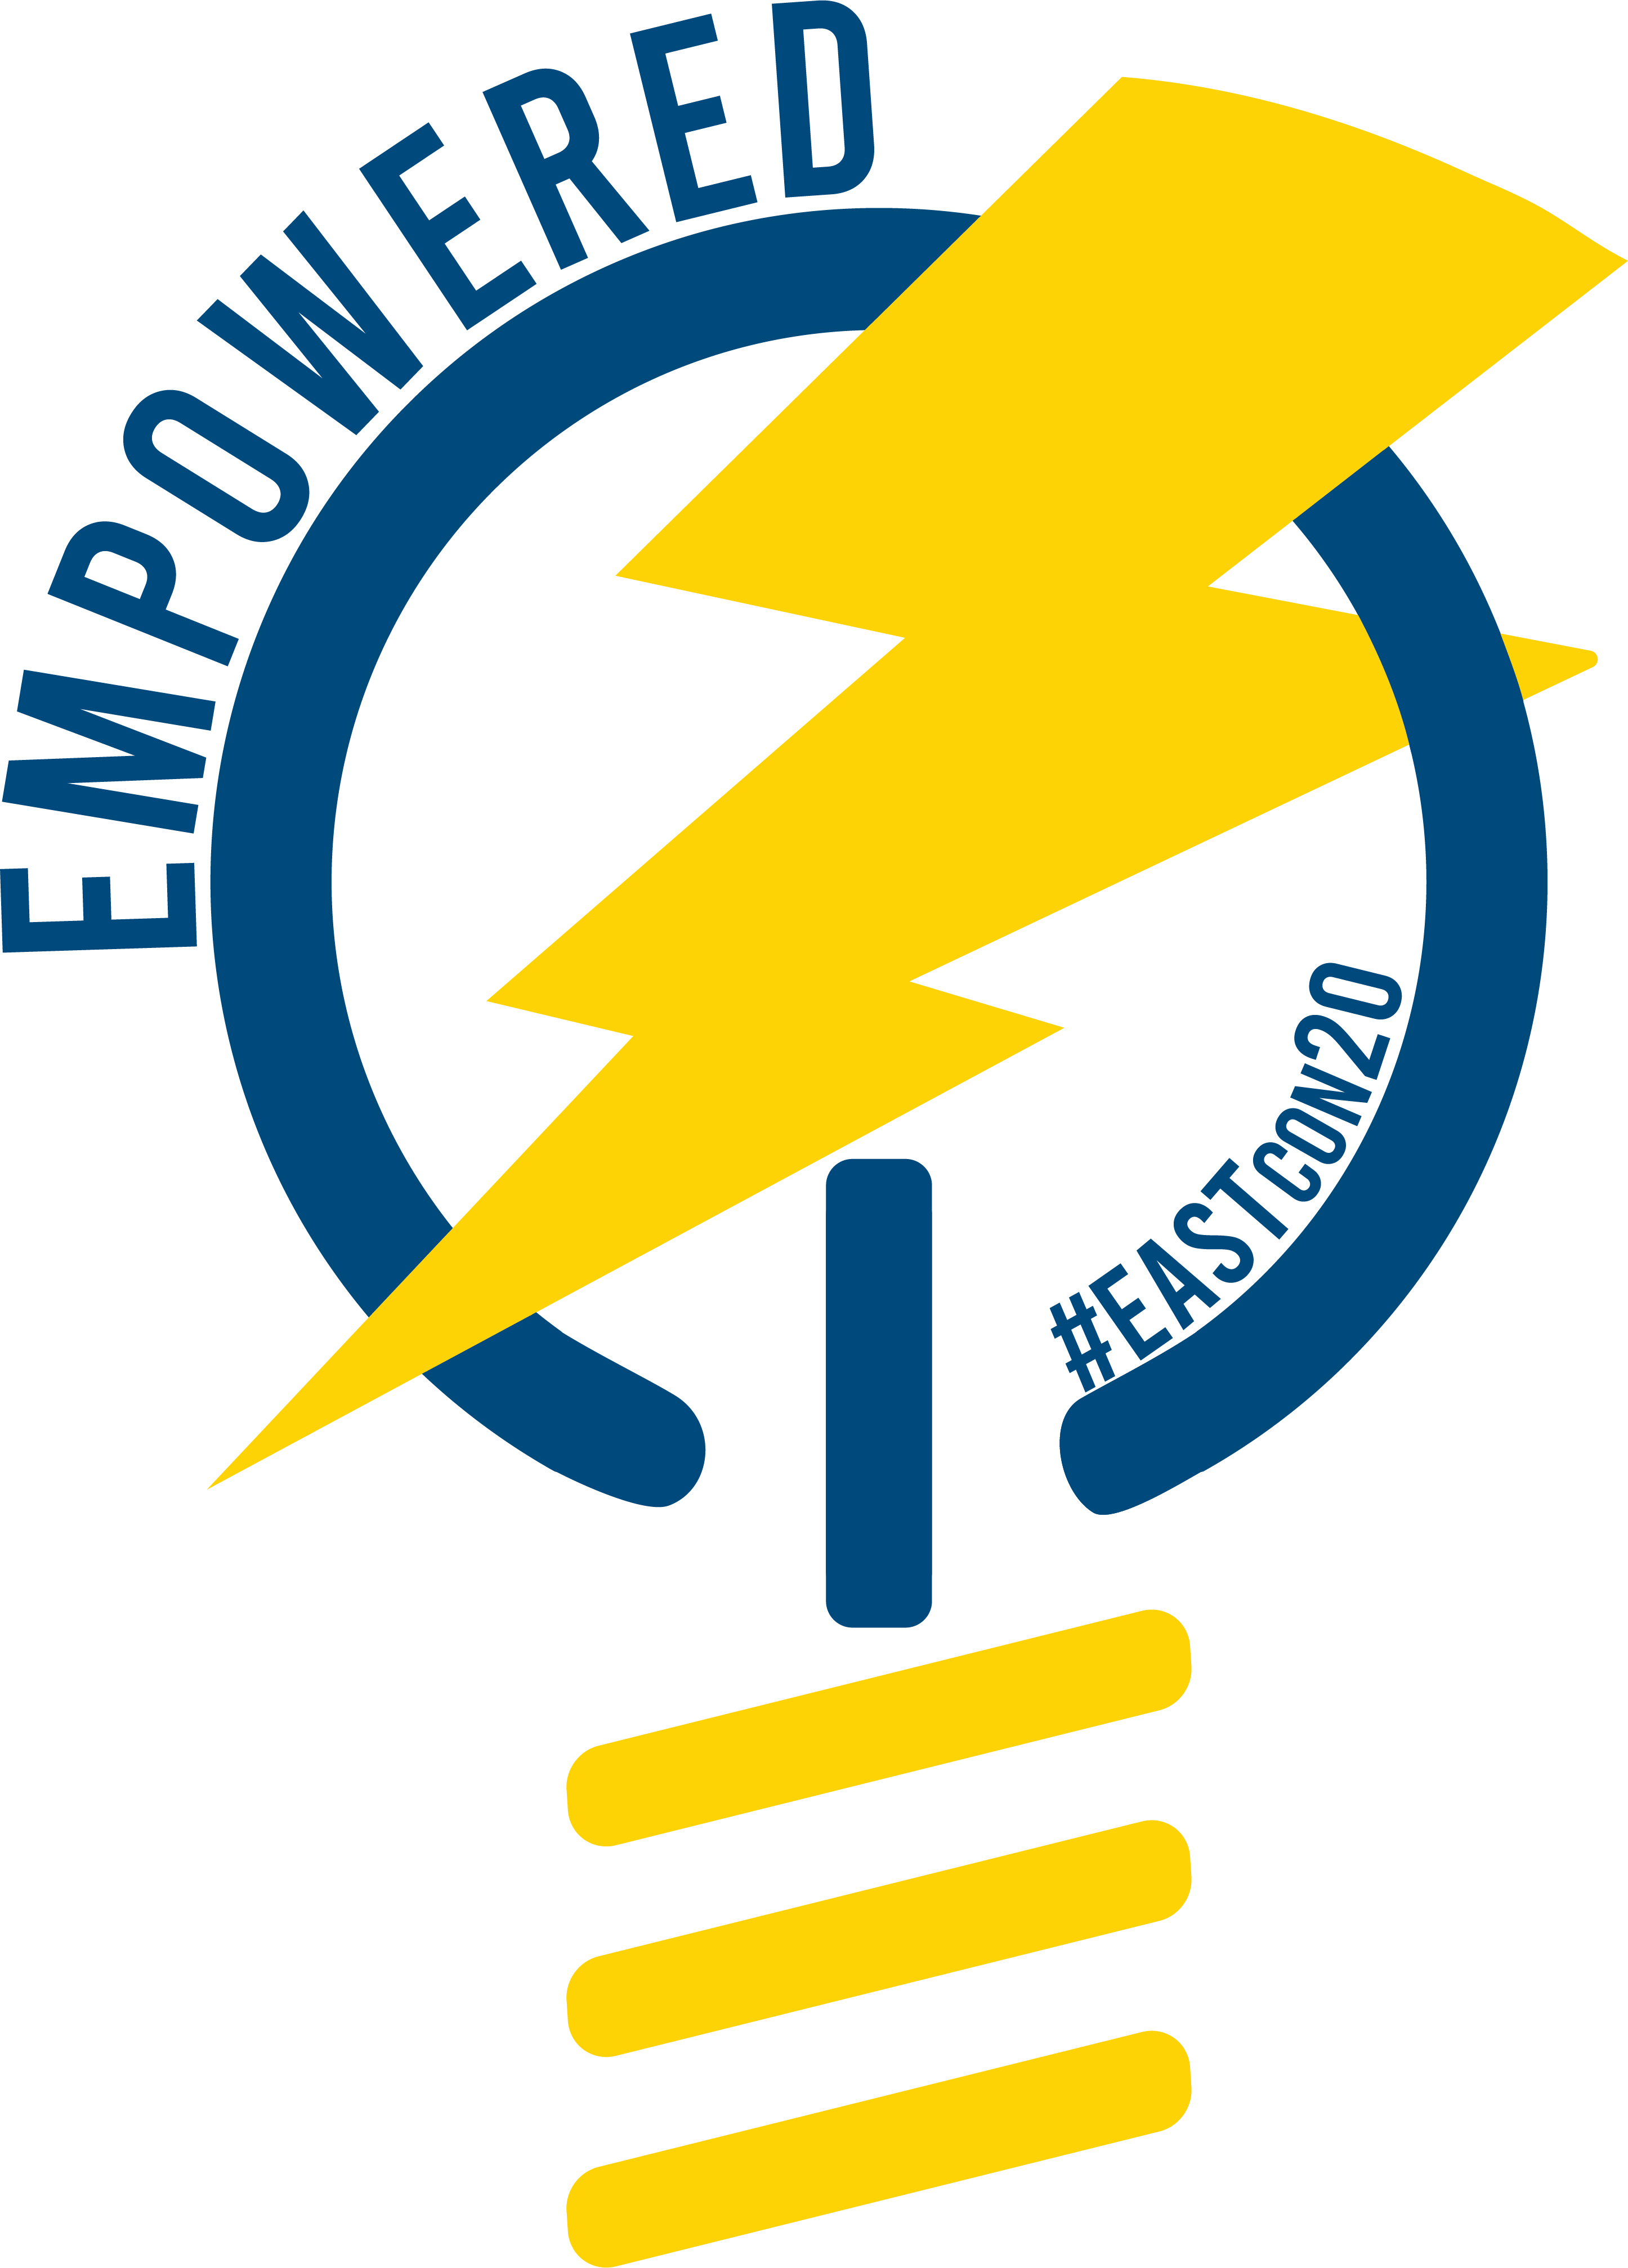 EAST Initiative Logo